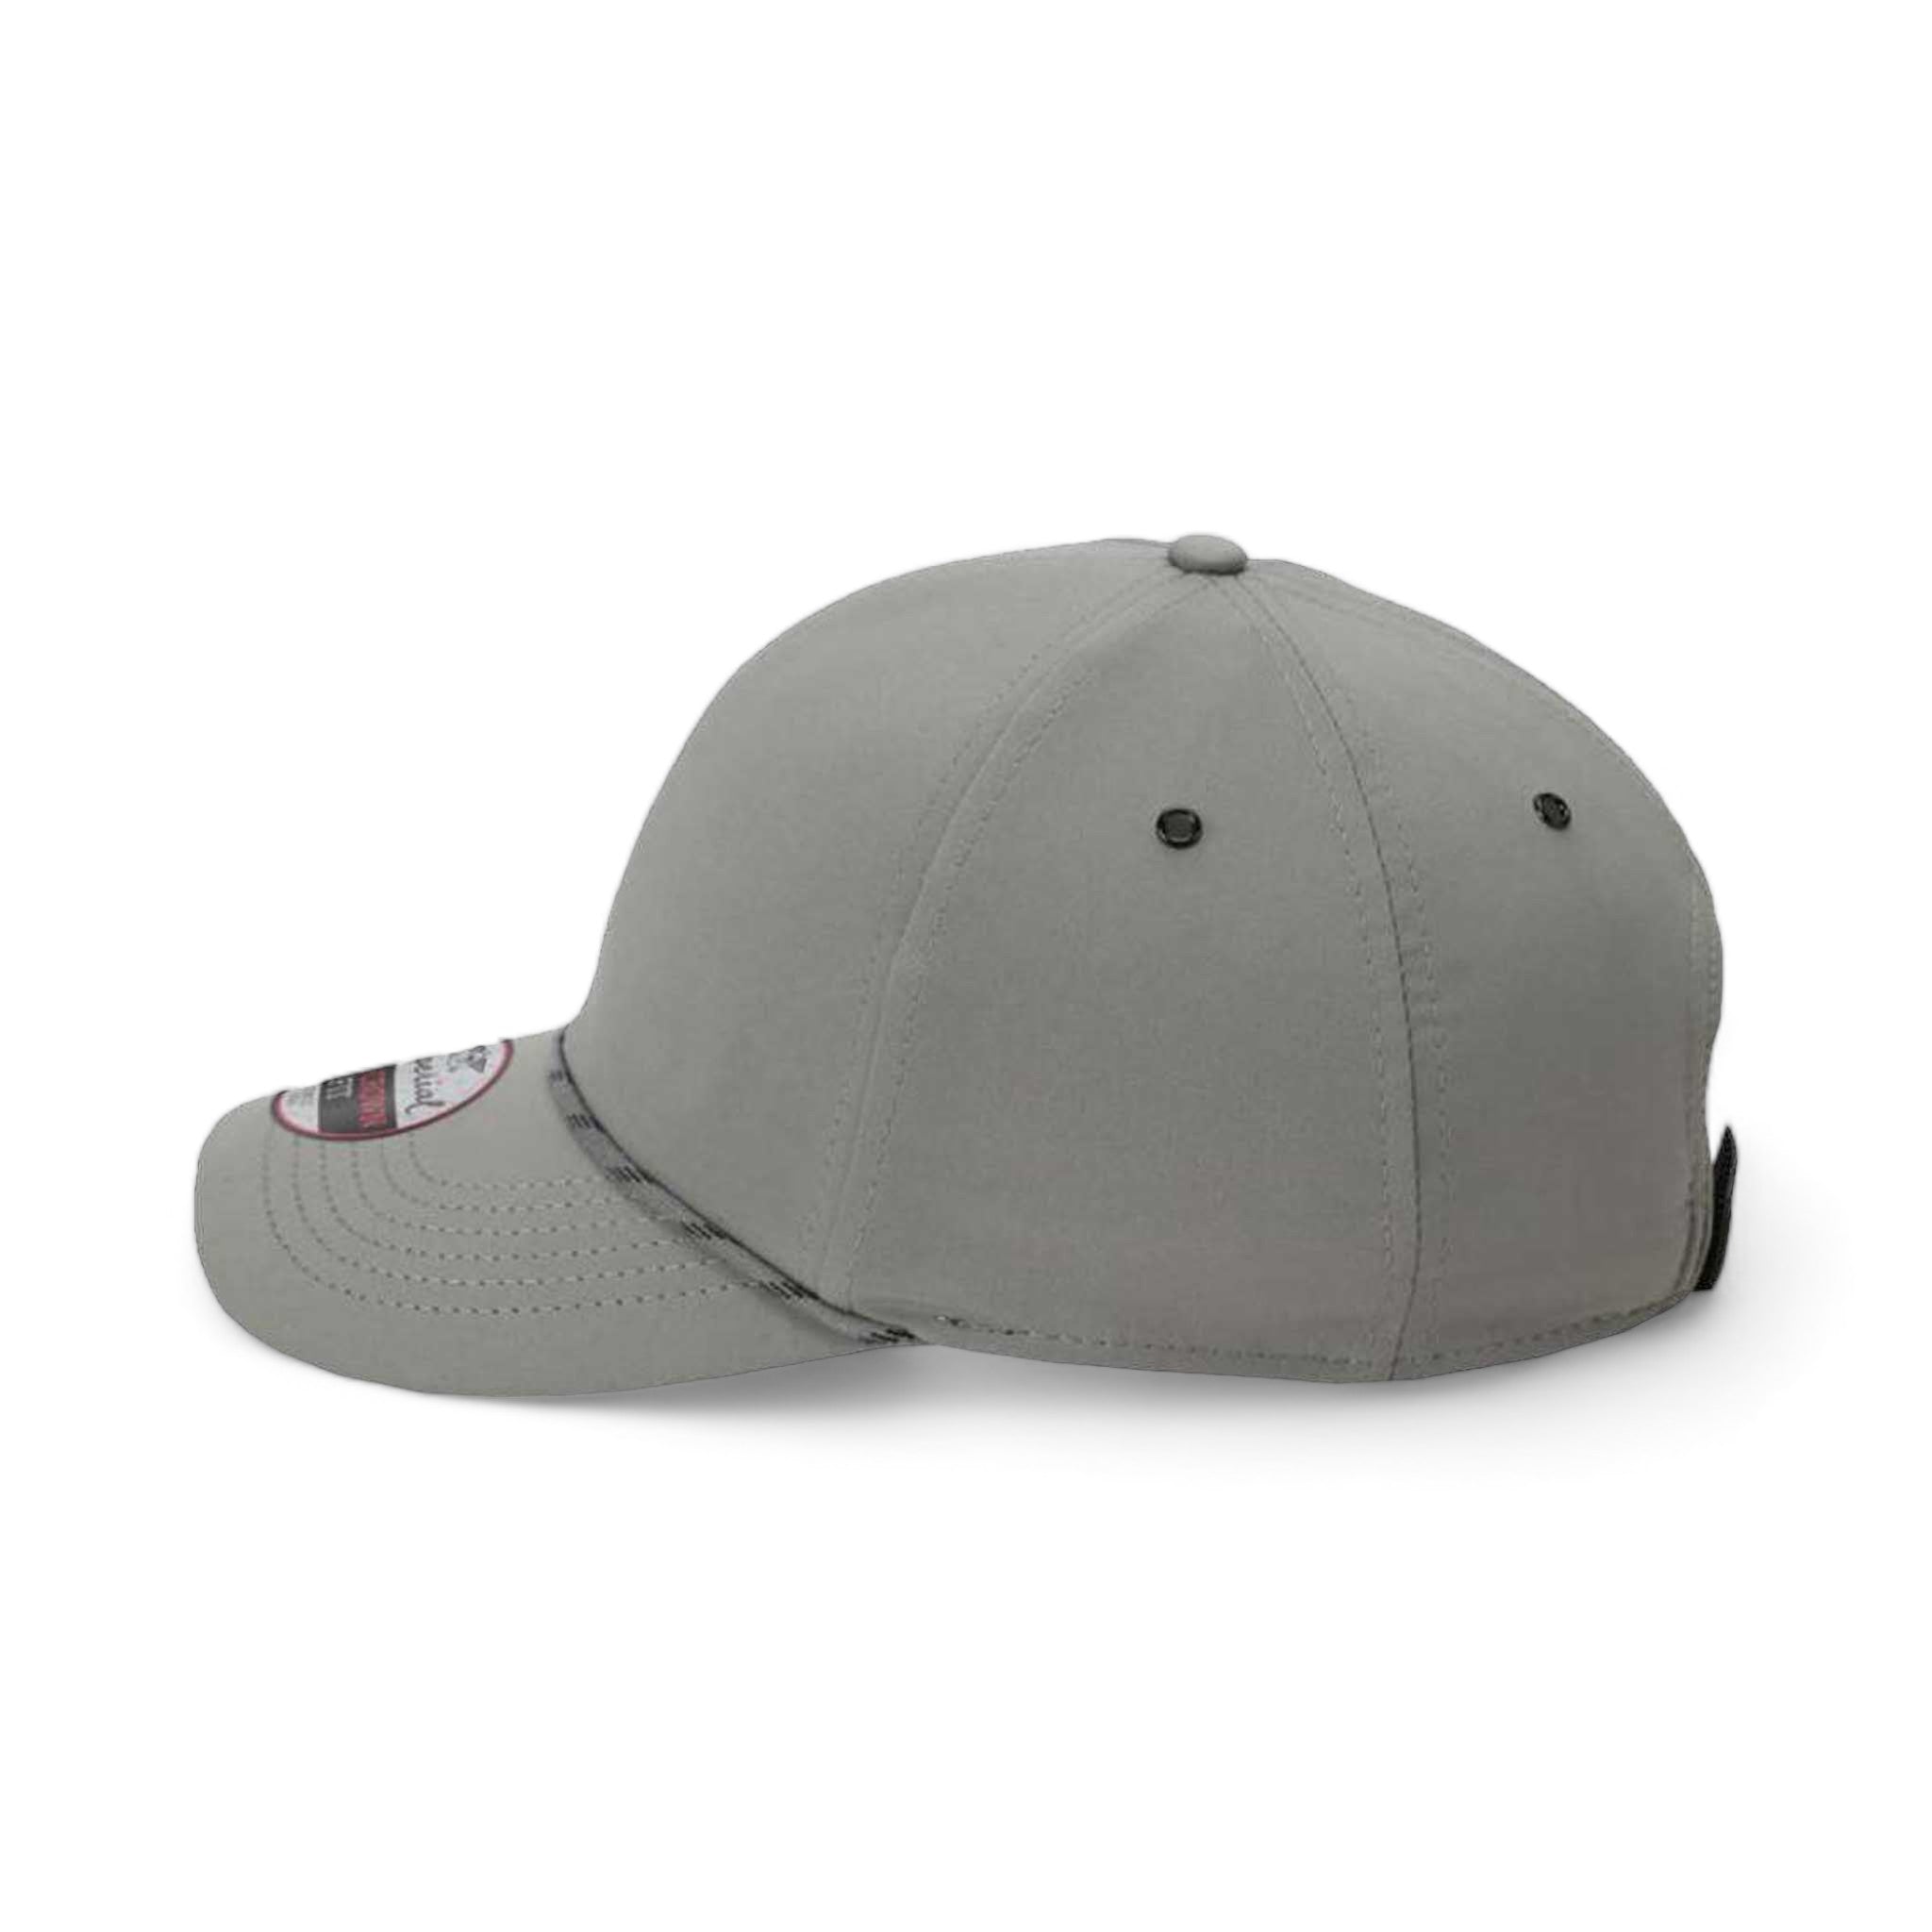 Side view of Imperial 6054 custom hat in grey